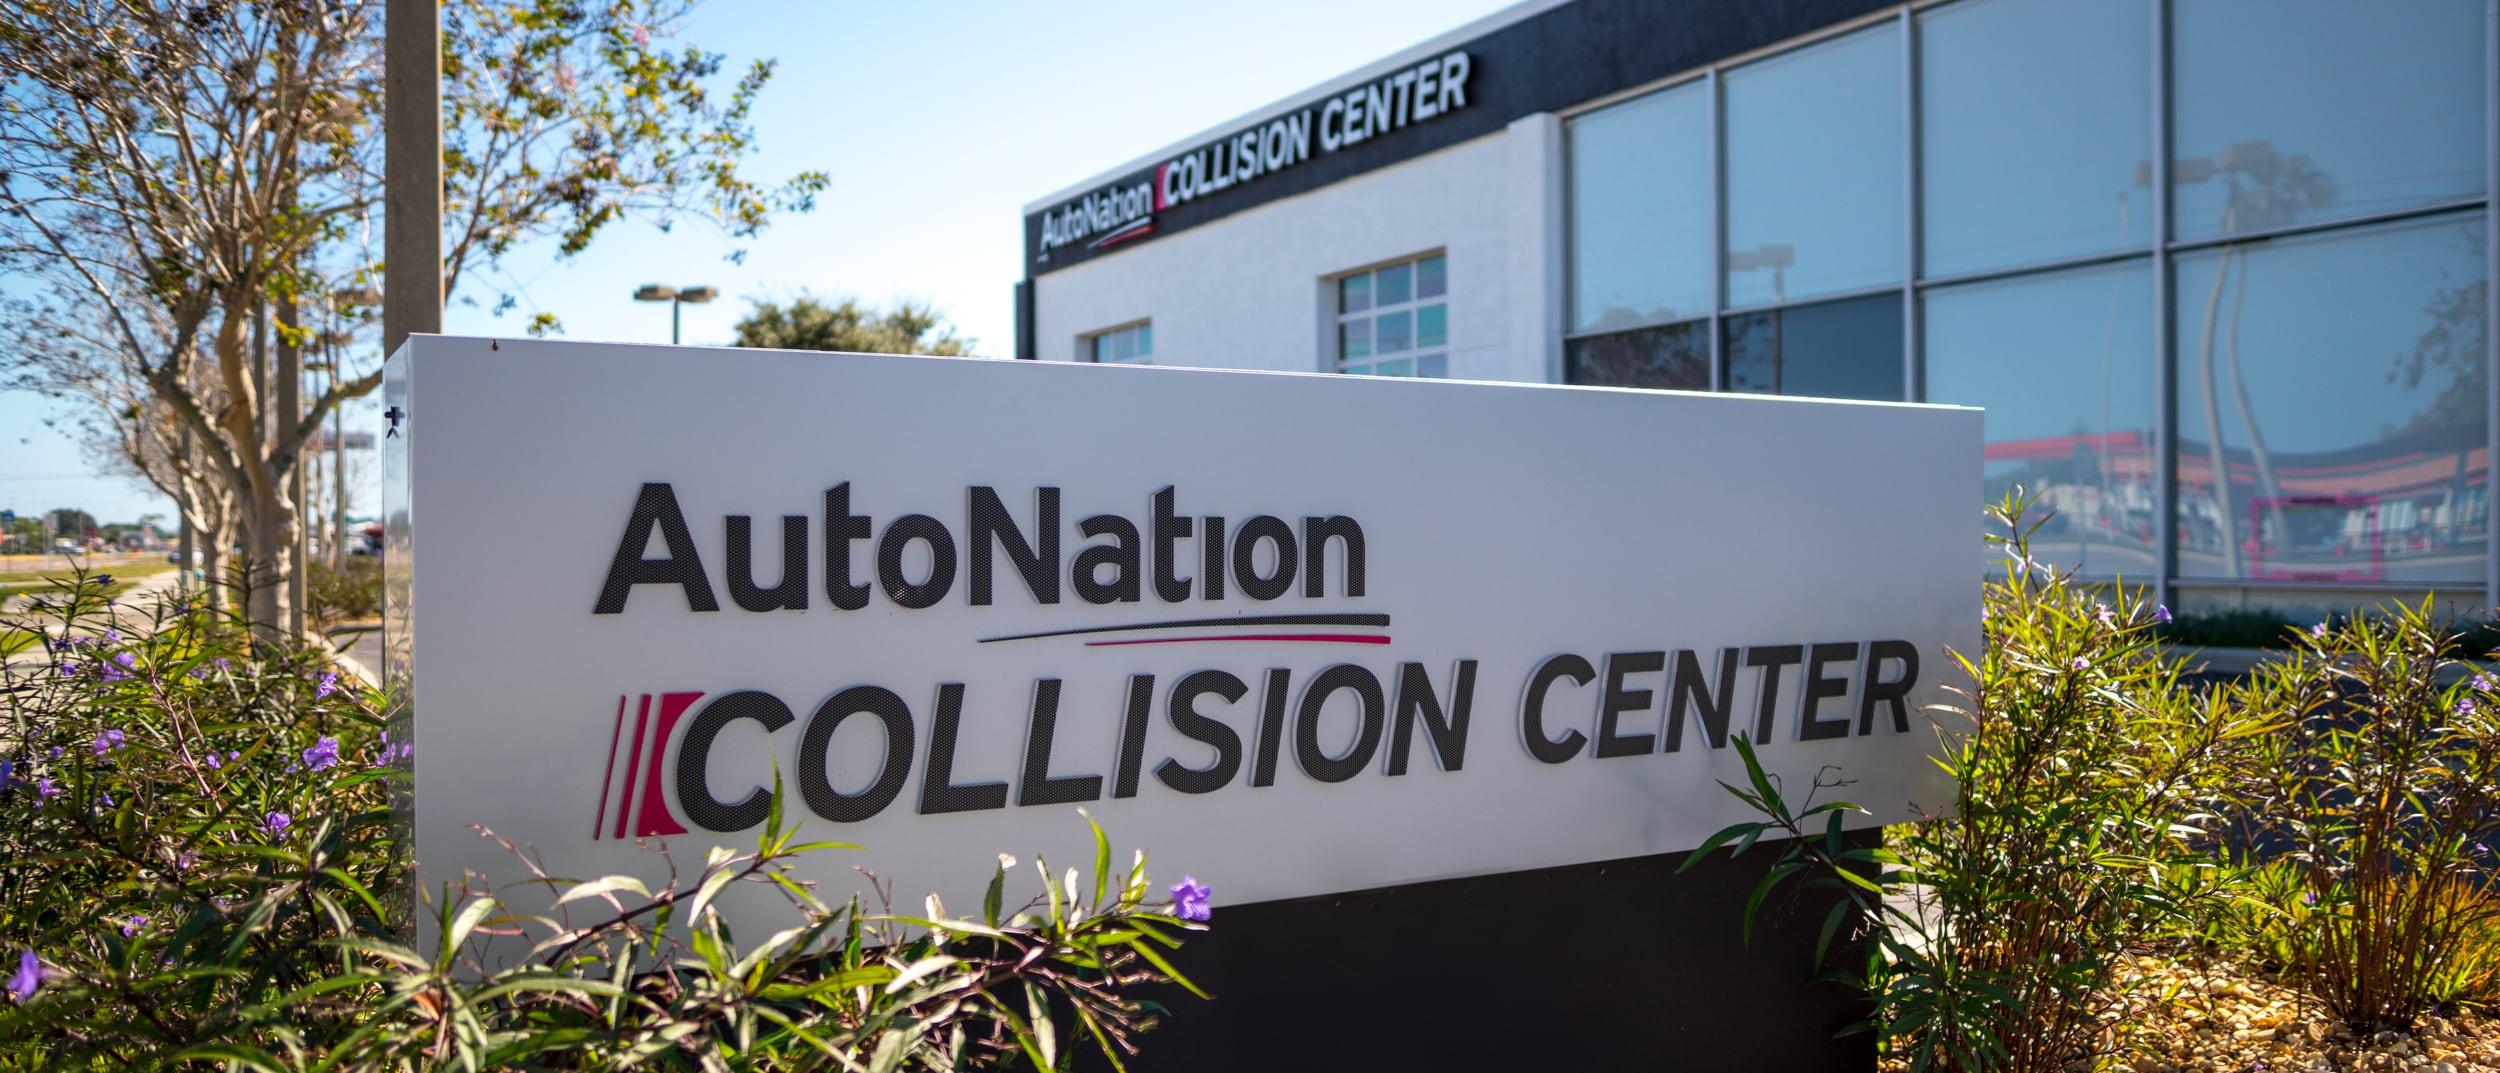 Exterior view of AutoNation Collision Center at AutoNation Chevrolet Spokane Valley